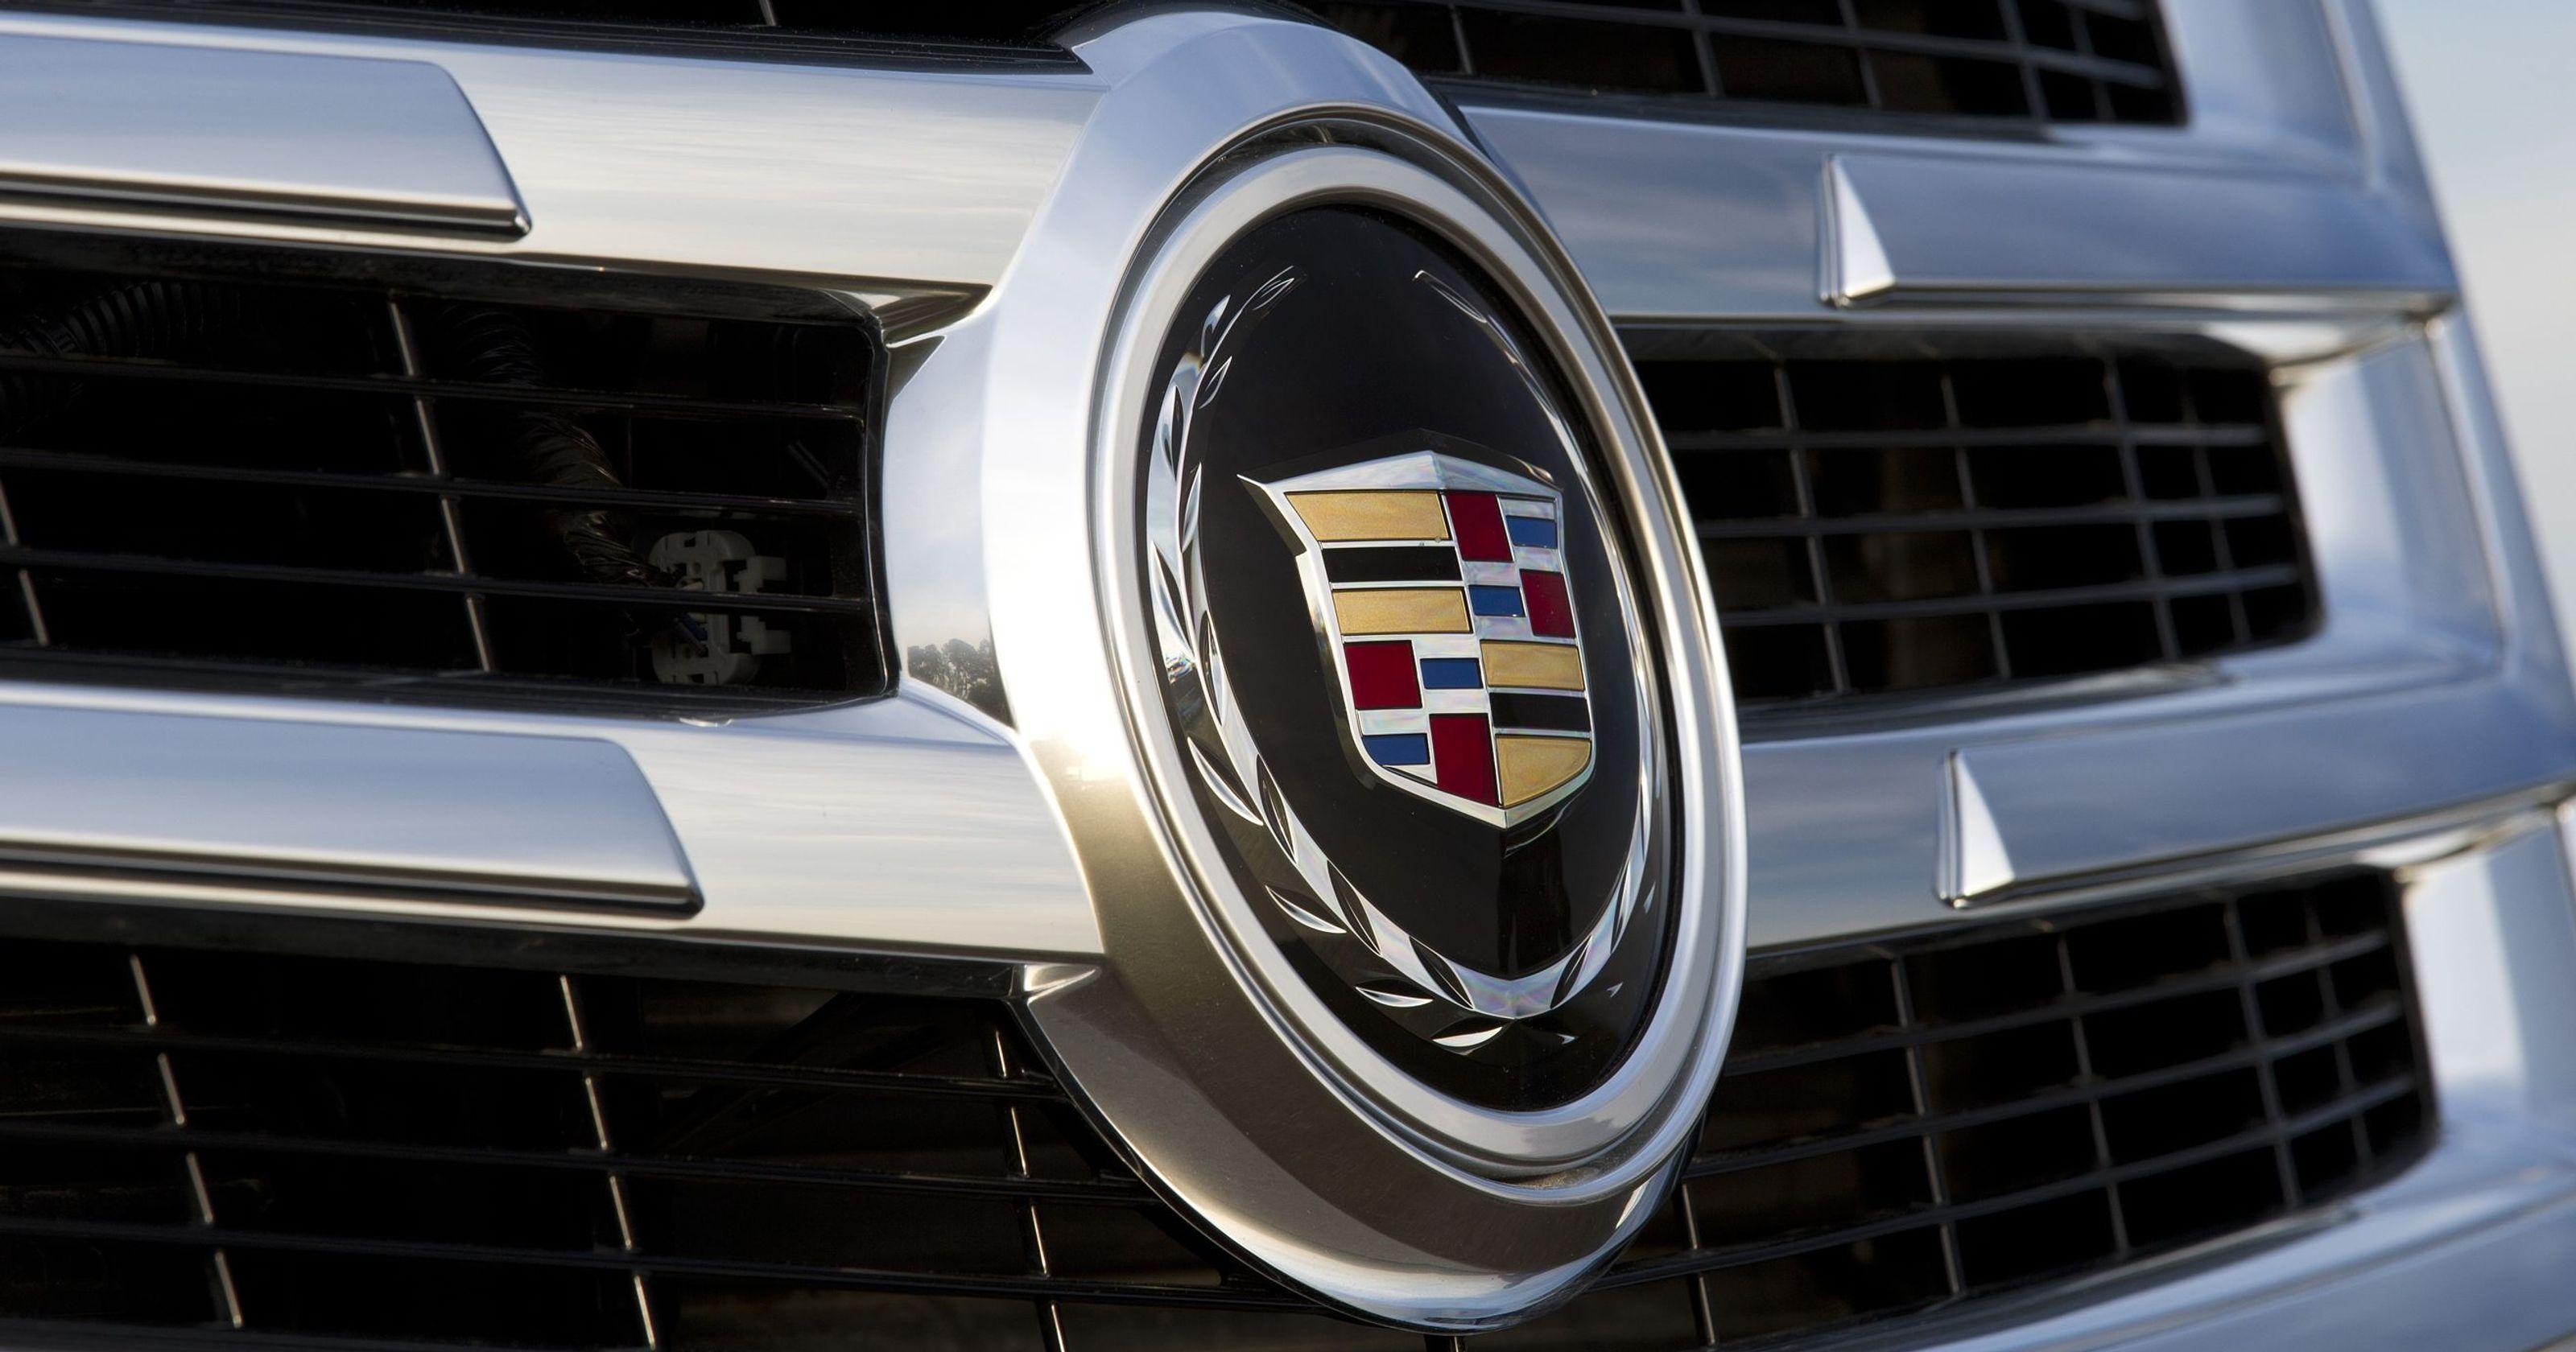 2014 New Cadillac Logo - Almost all-new Escalade has old Cadillac badge